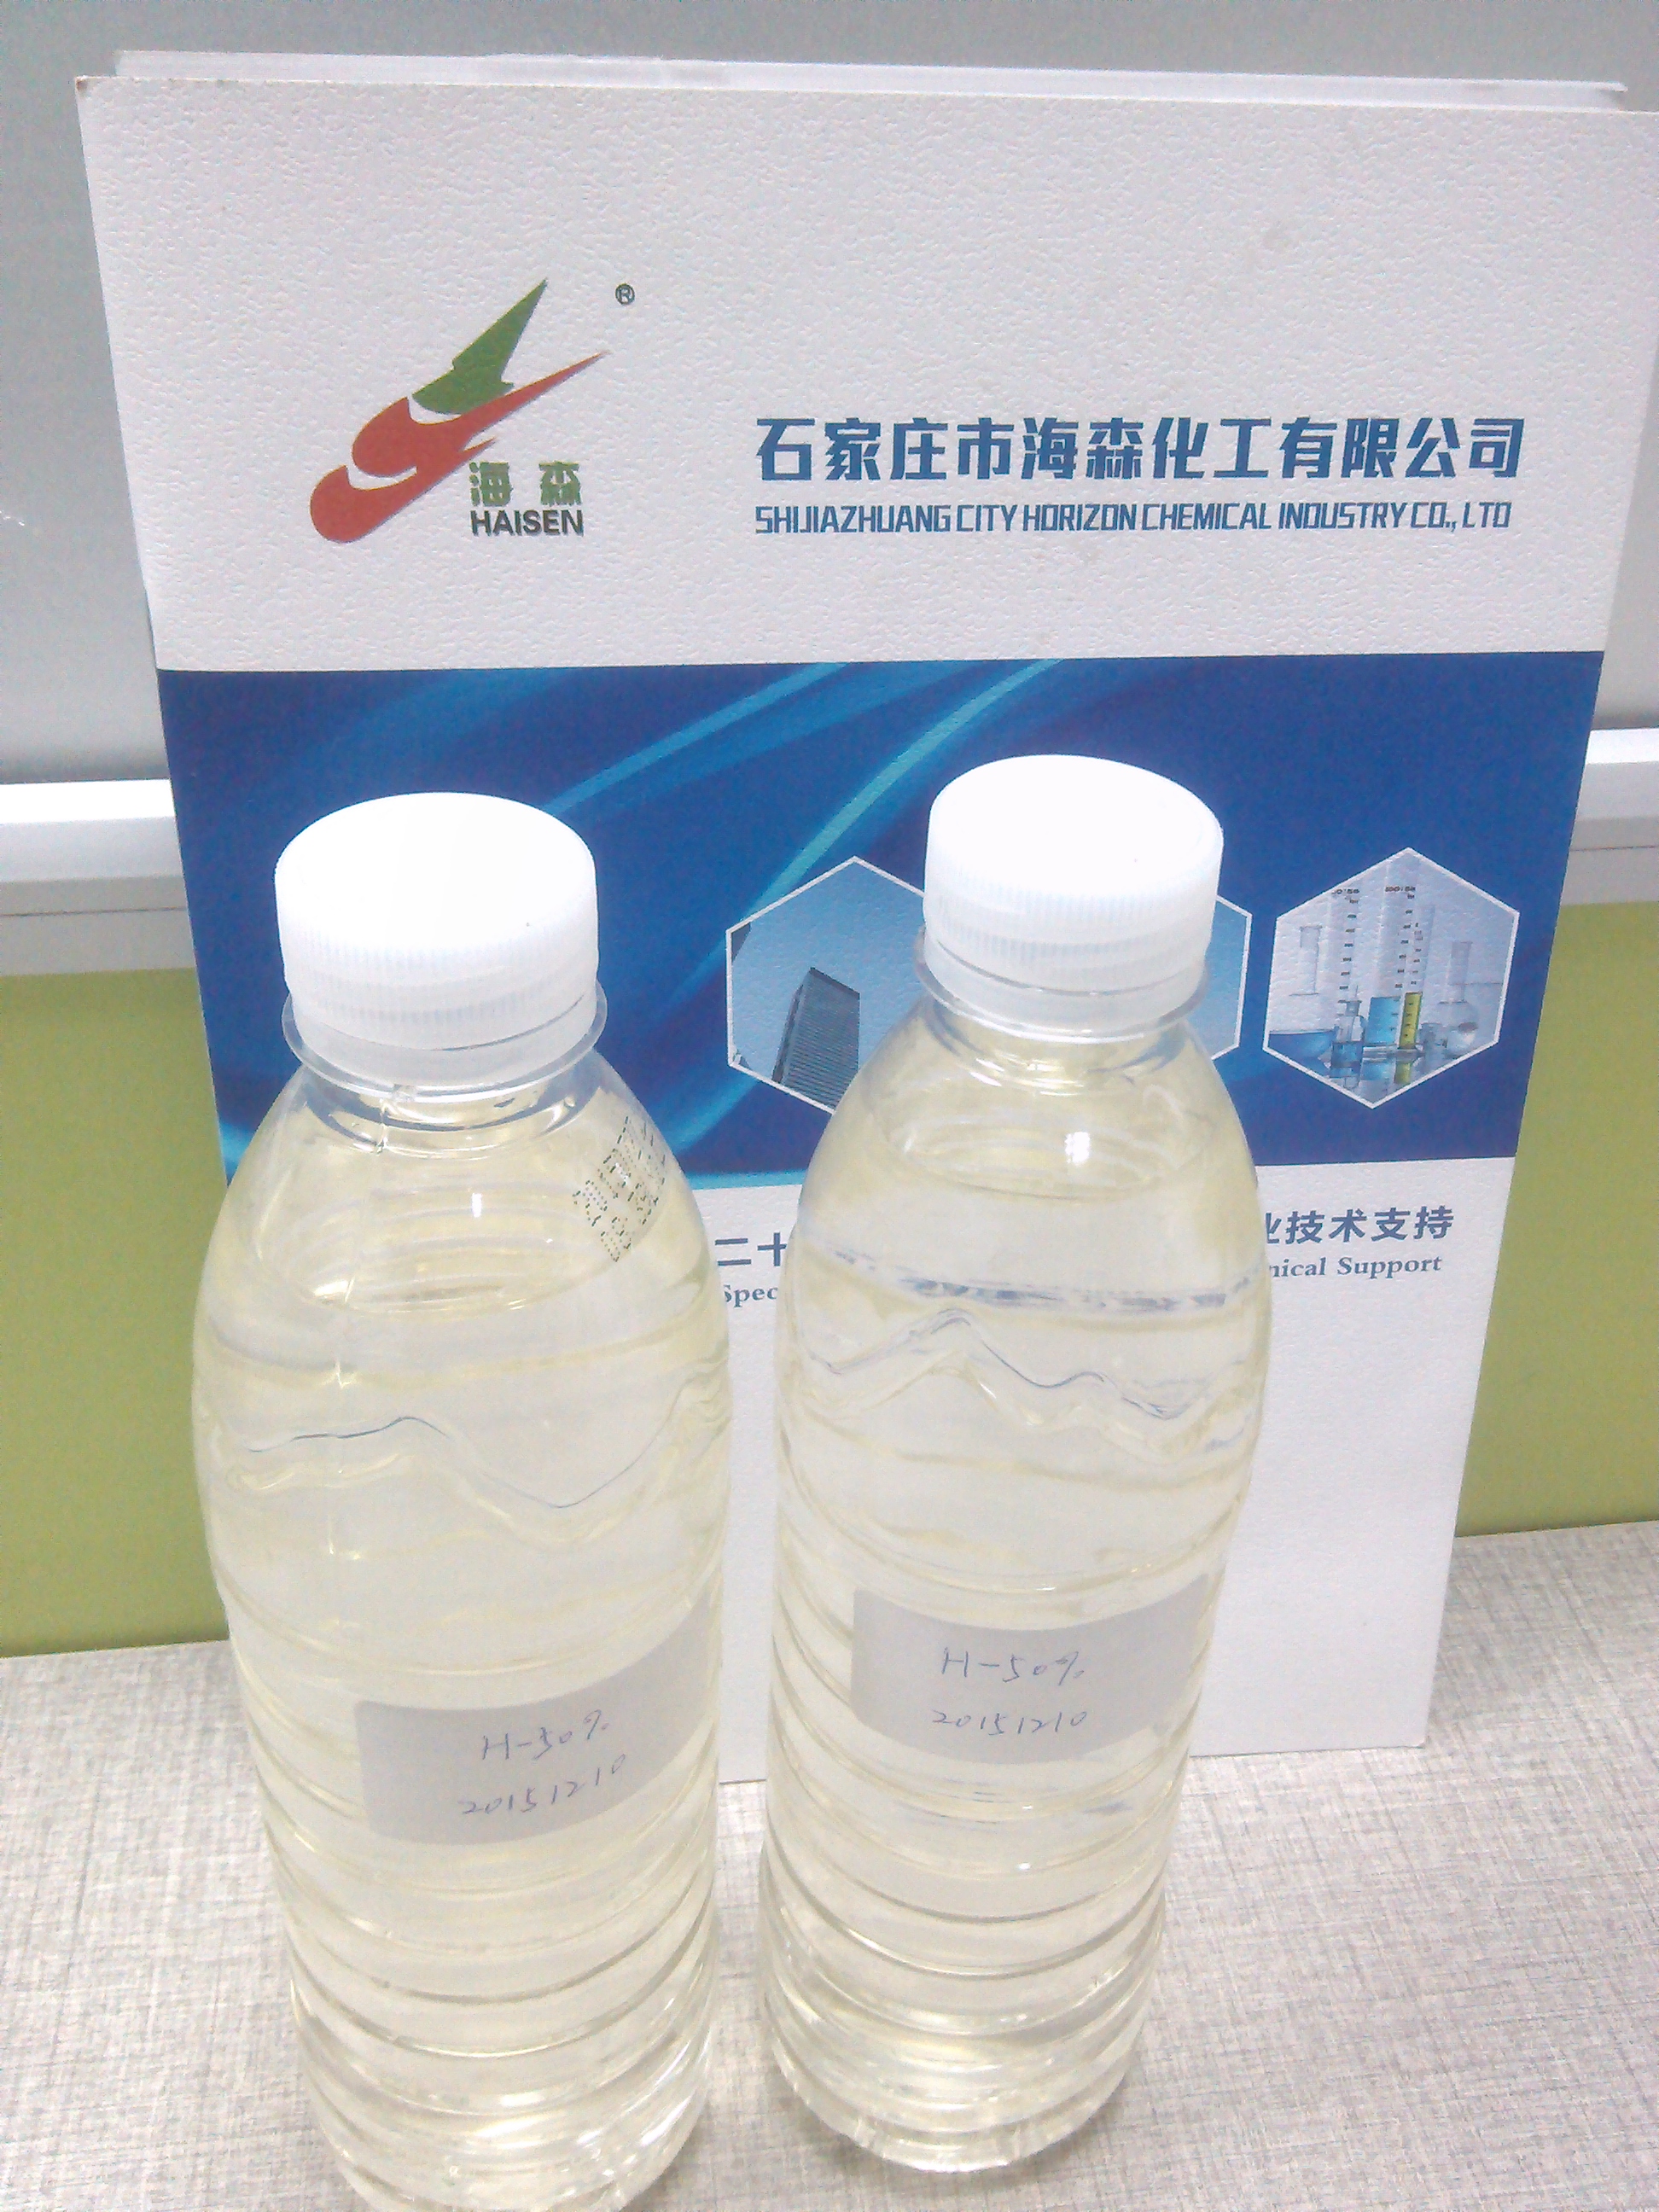 Polycarboxylic acid water reducer (masterbatch is large monomer HPEG-2400)